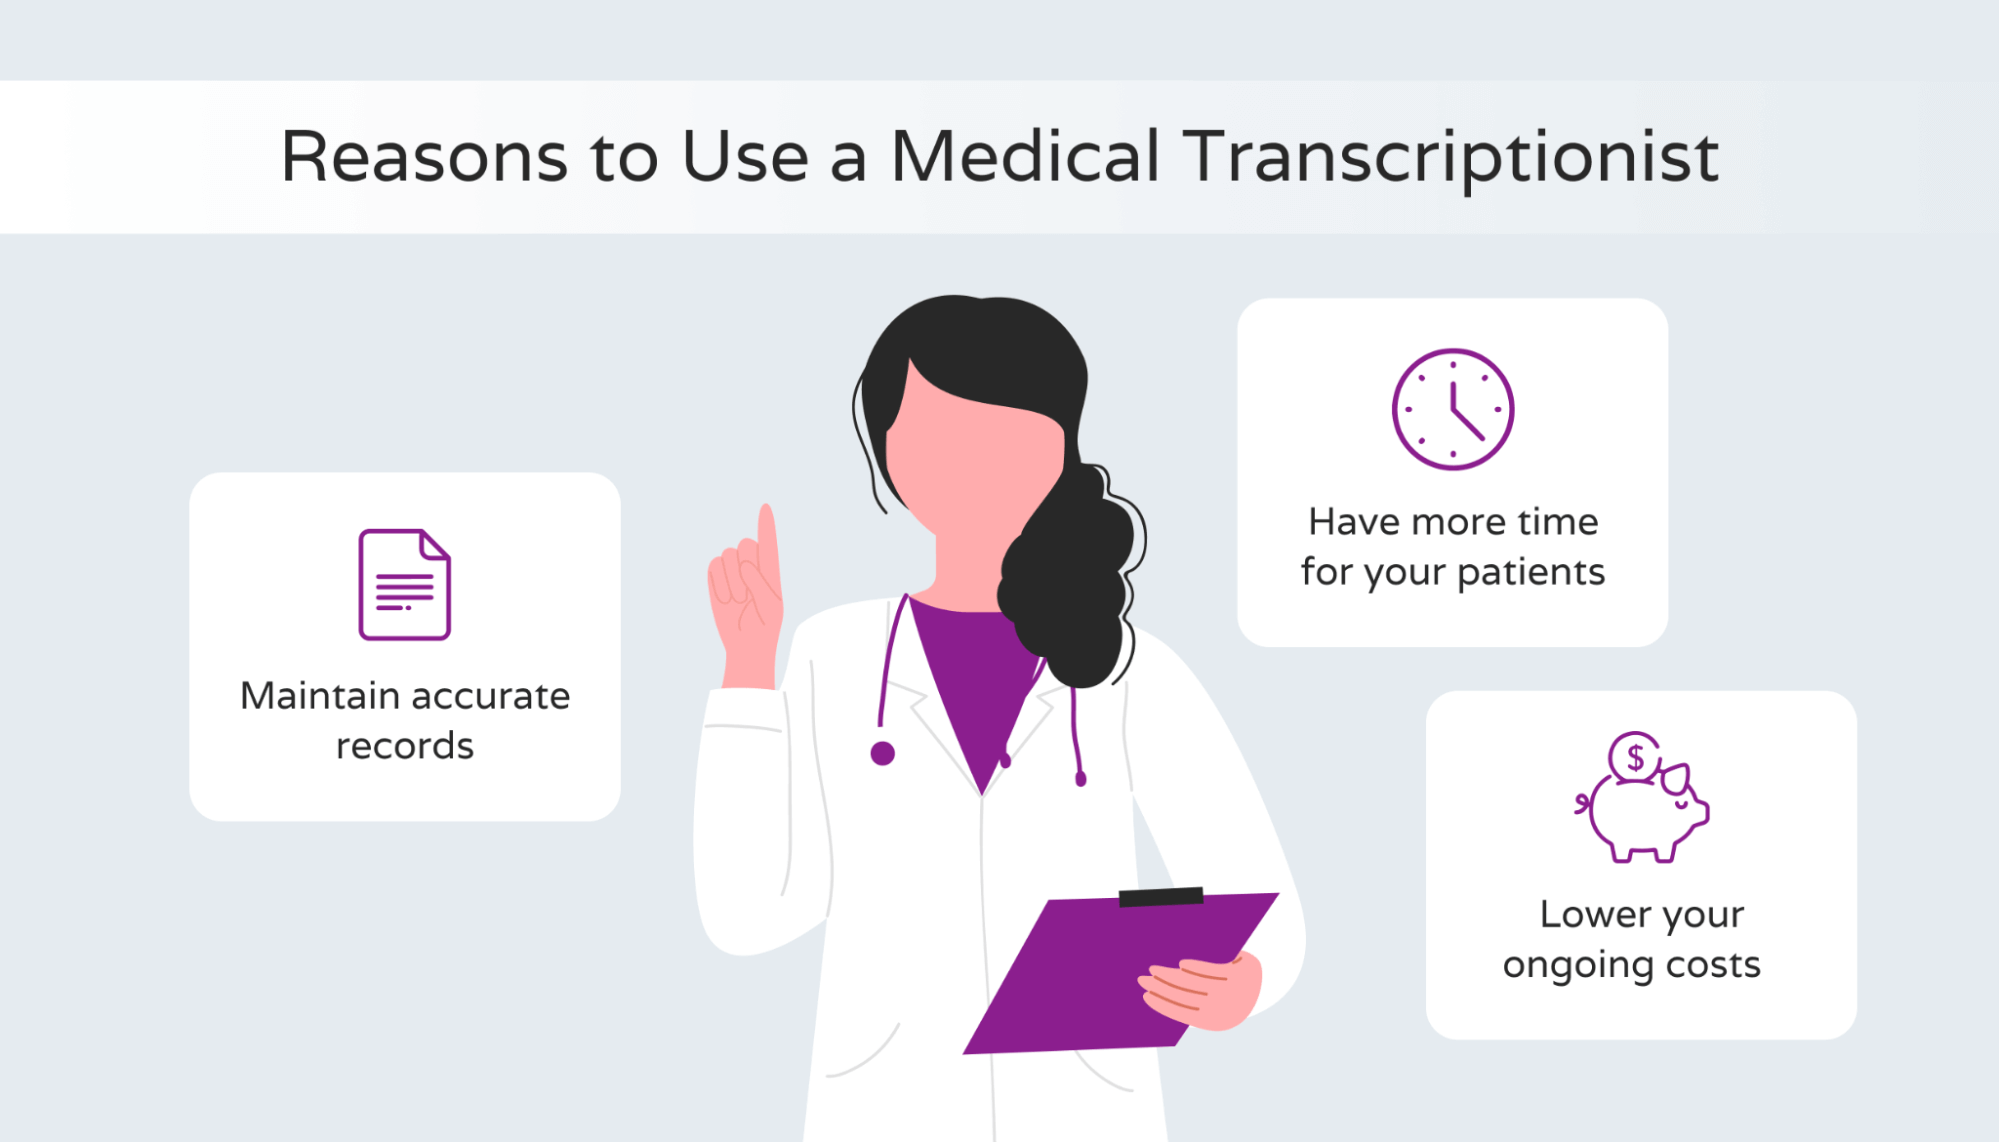 Medical transcriptionist benefits